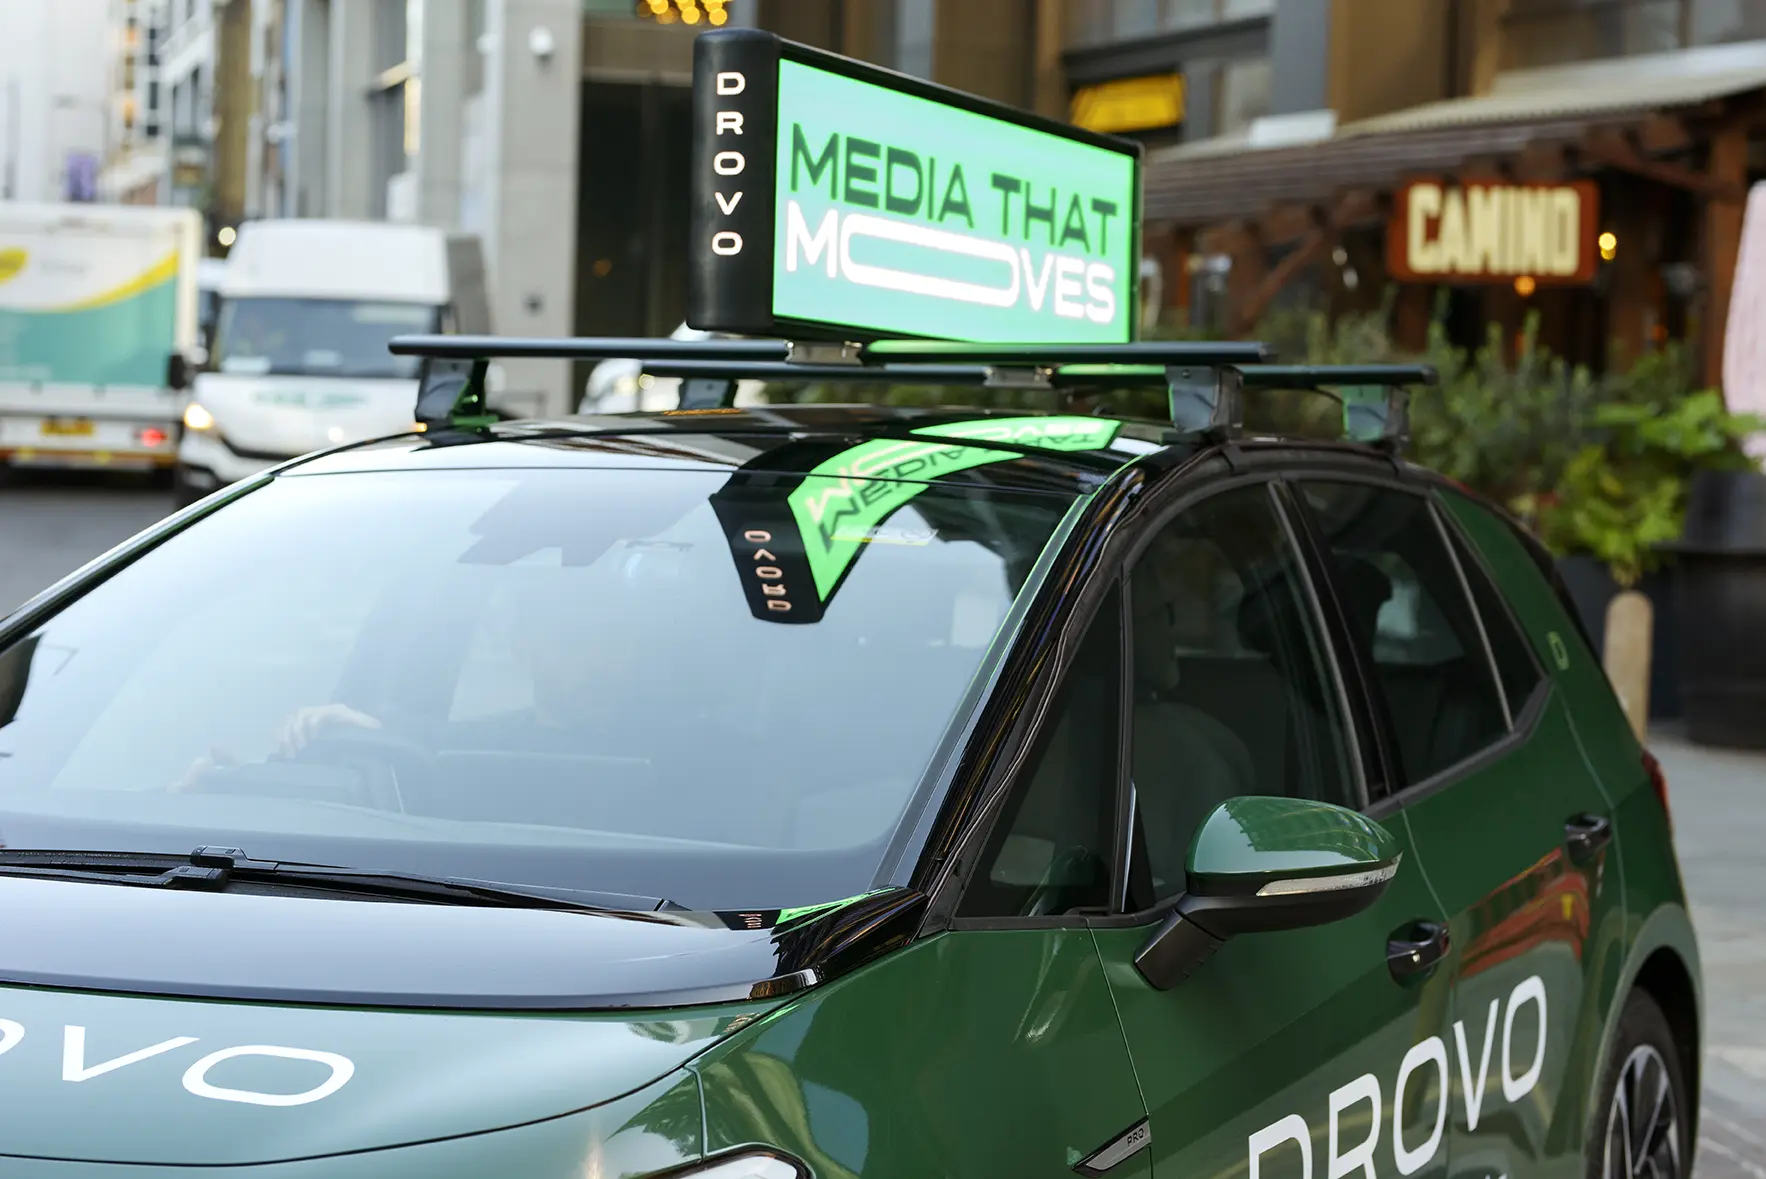 Drovo car top digital screen